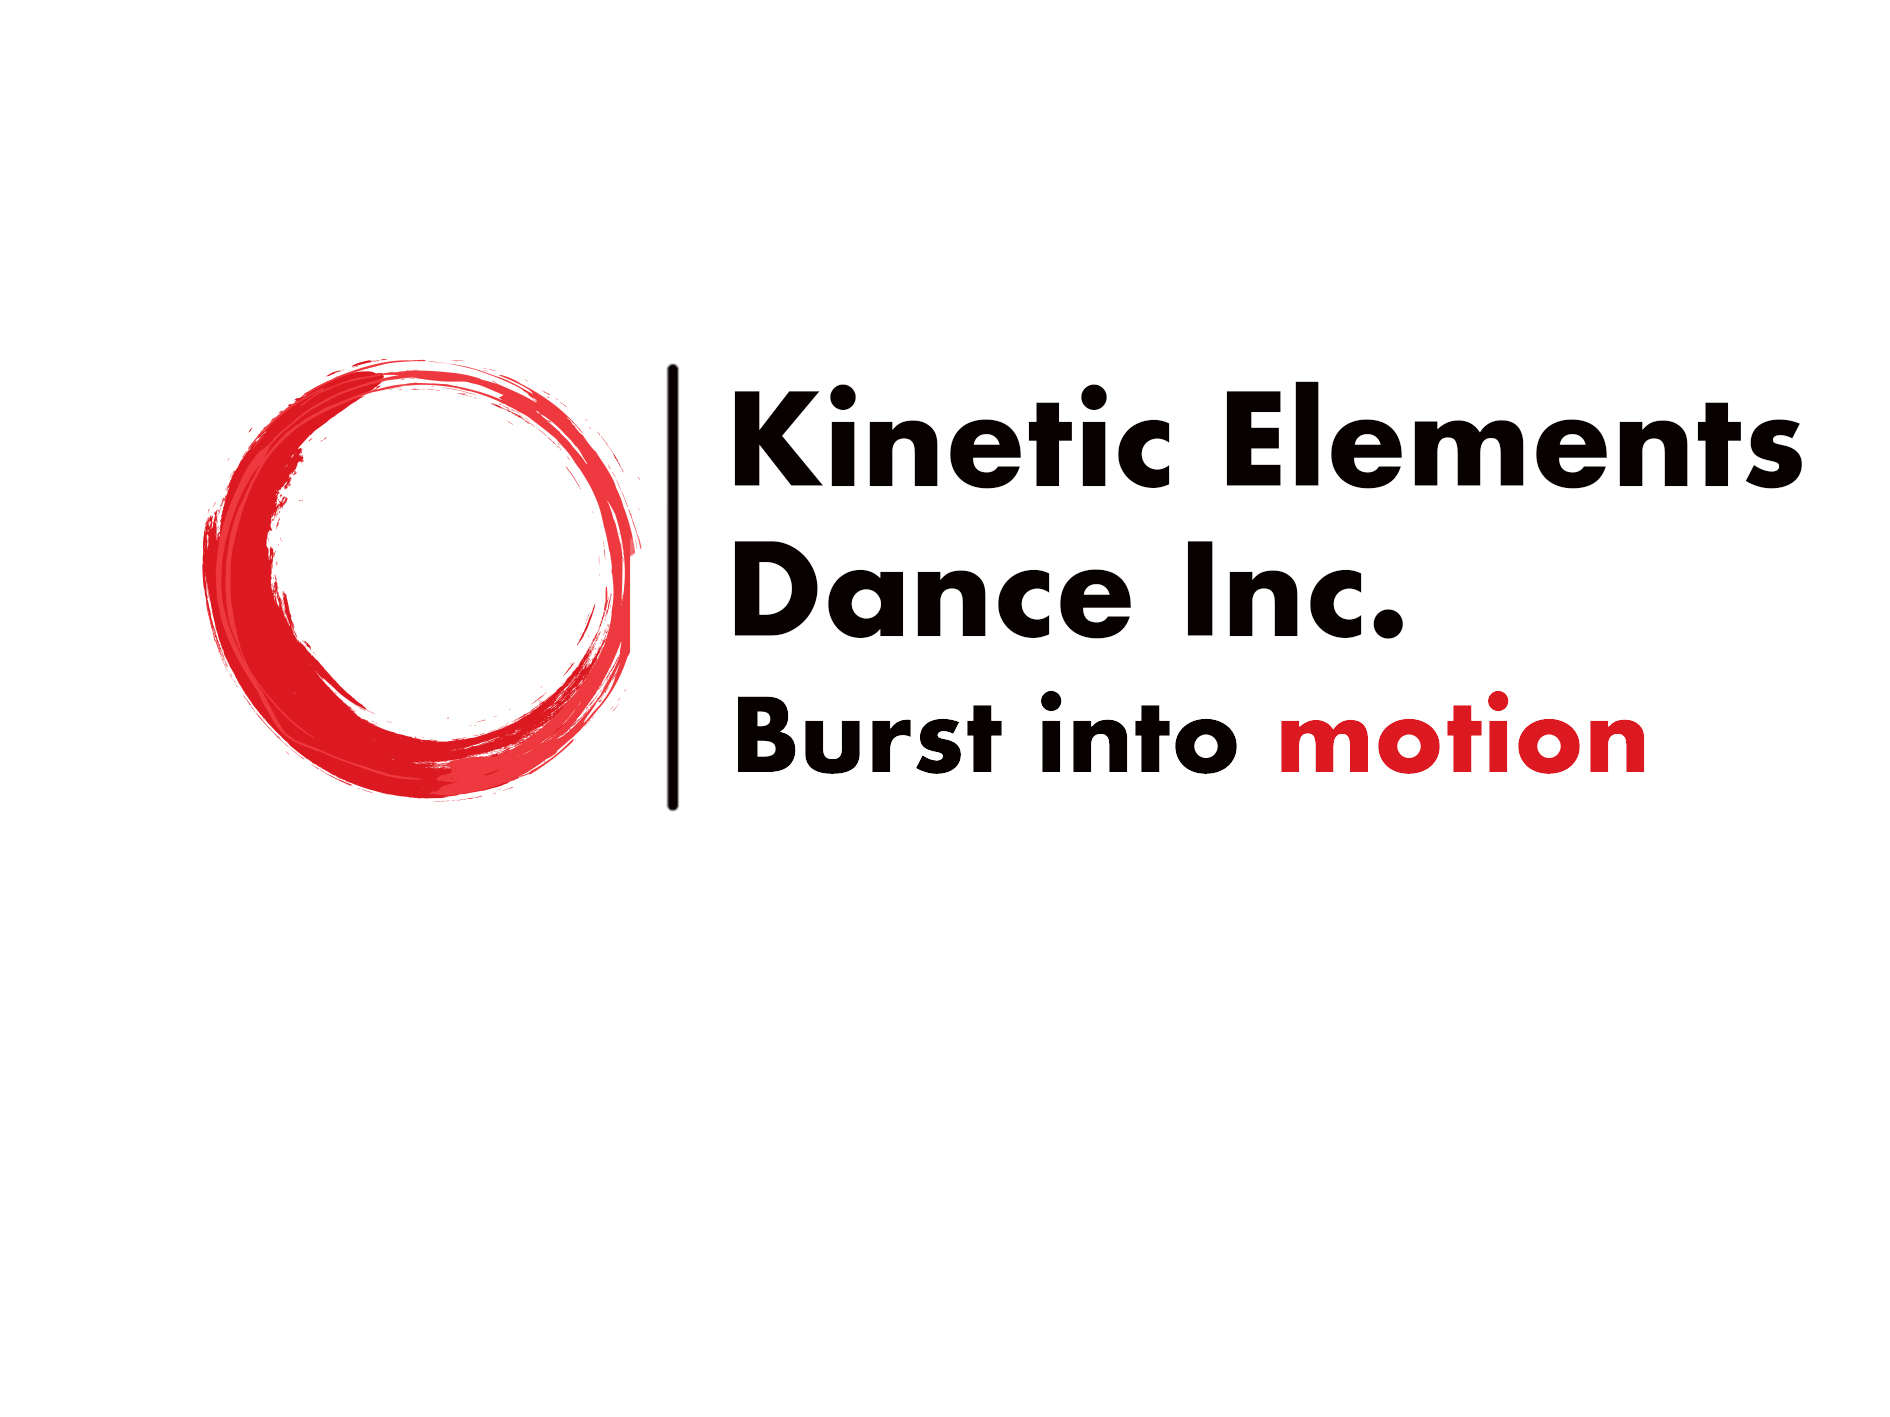 Kinetic Elements Dance